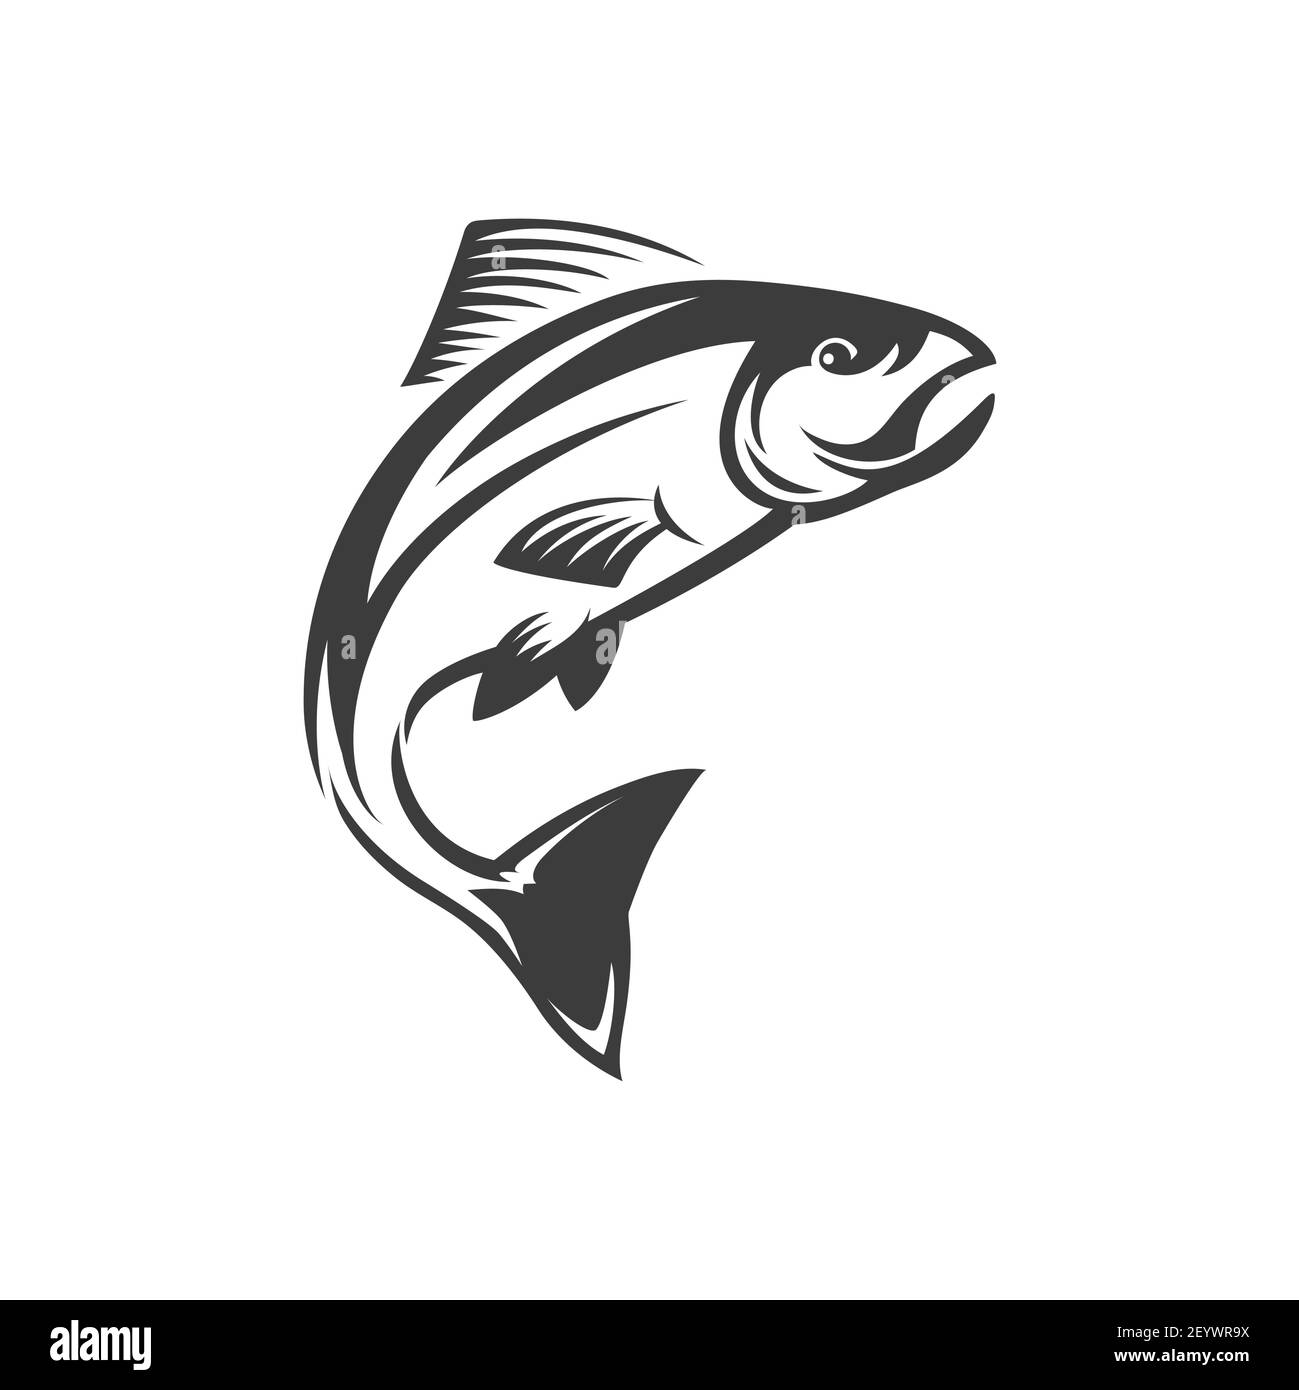 Pelagischer Fisch, kurze indische Makrele, Angelsport Trophäe Salzwasser Thunfisch isoliert monochrome Ikone. Vector Makrele atlantic Chub. Wahoo scombrid Fisch, Stock Vektor